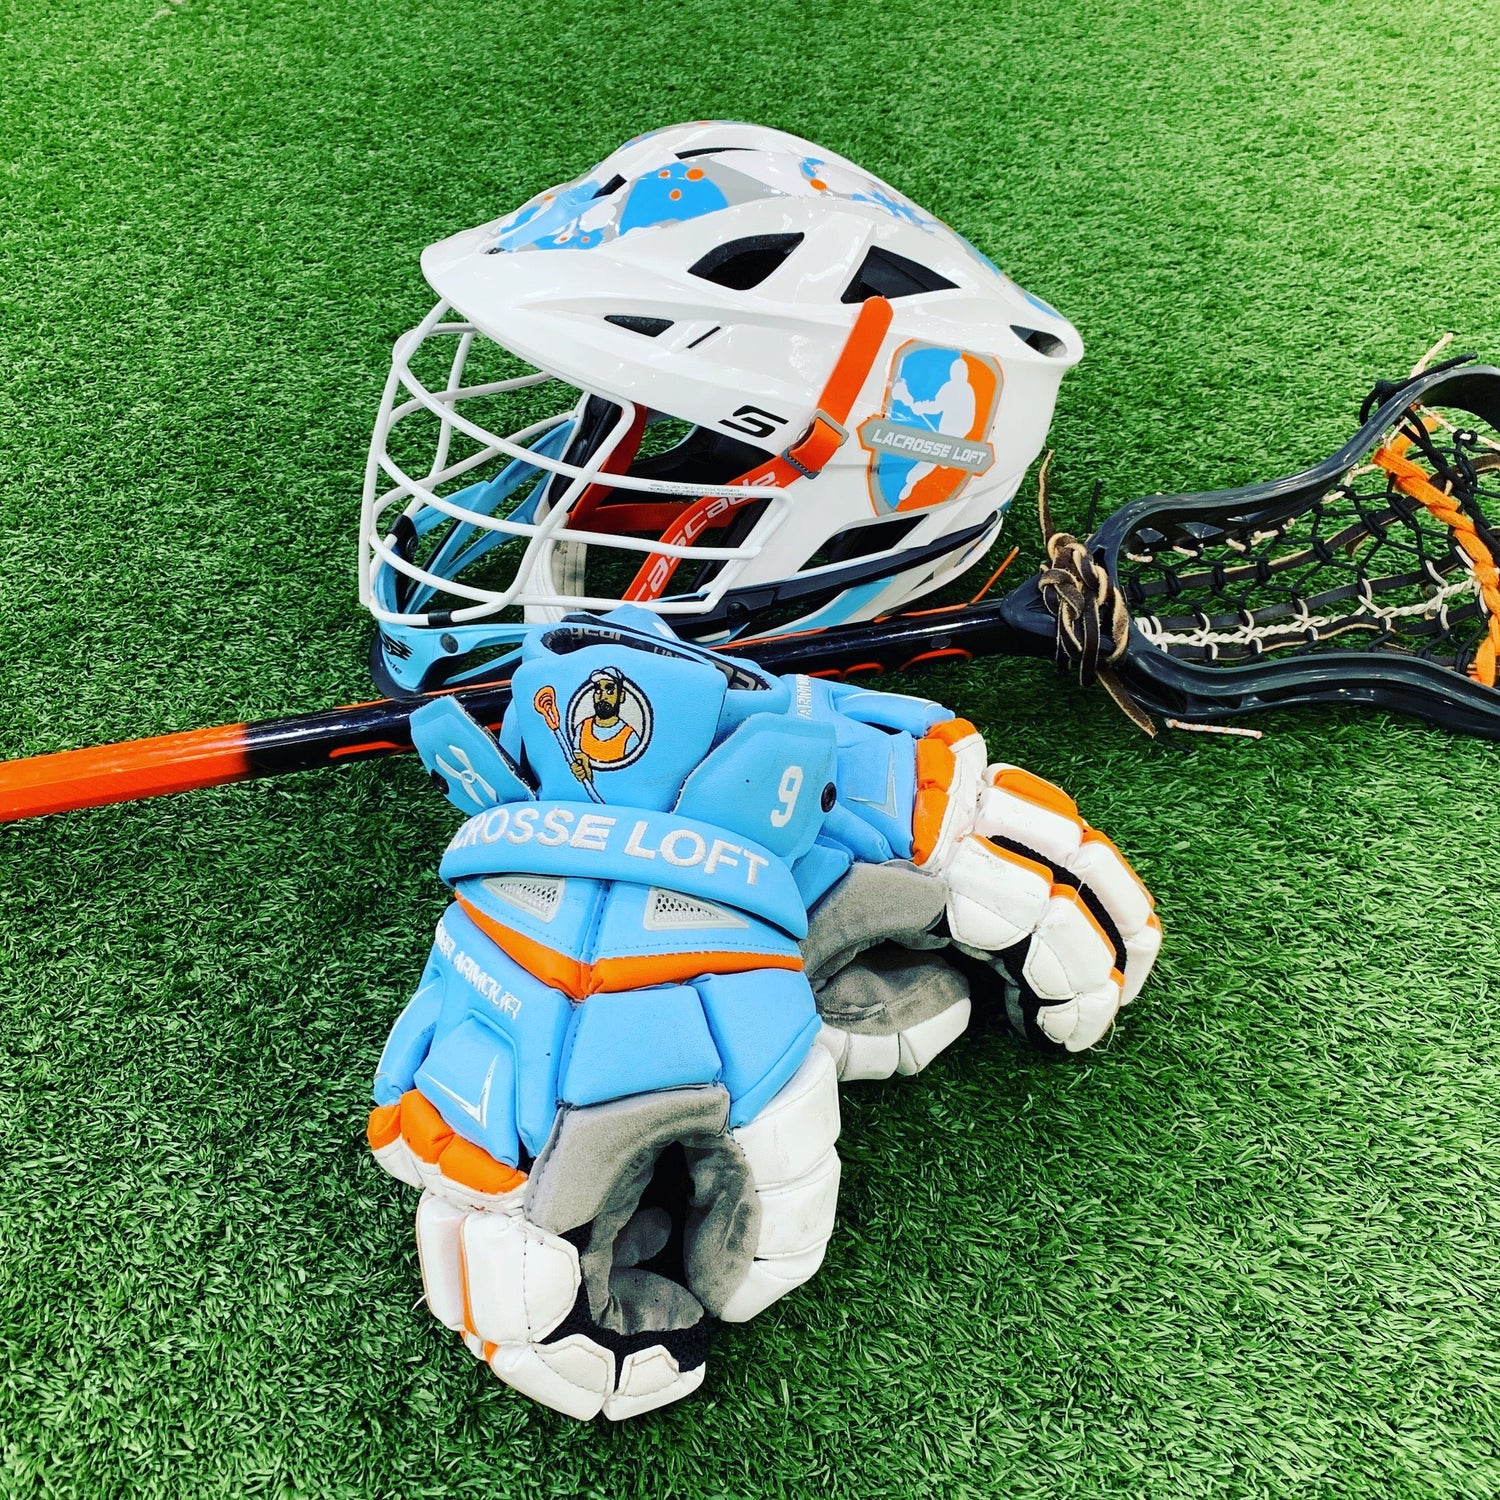 A lacrosse helmet, lacrosse gloves, and lacrosse shafts.